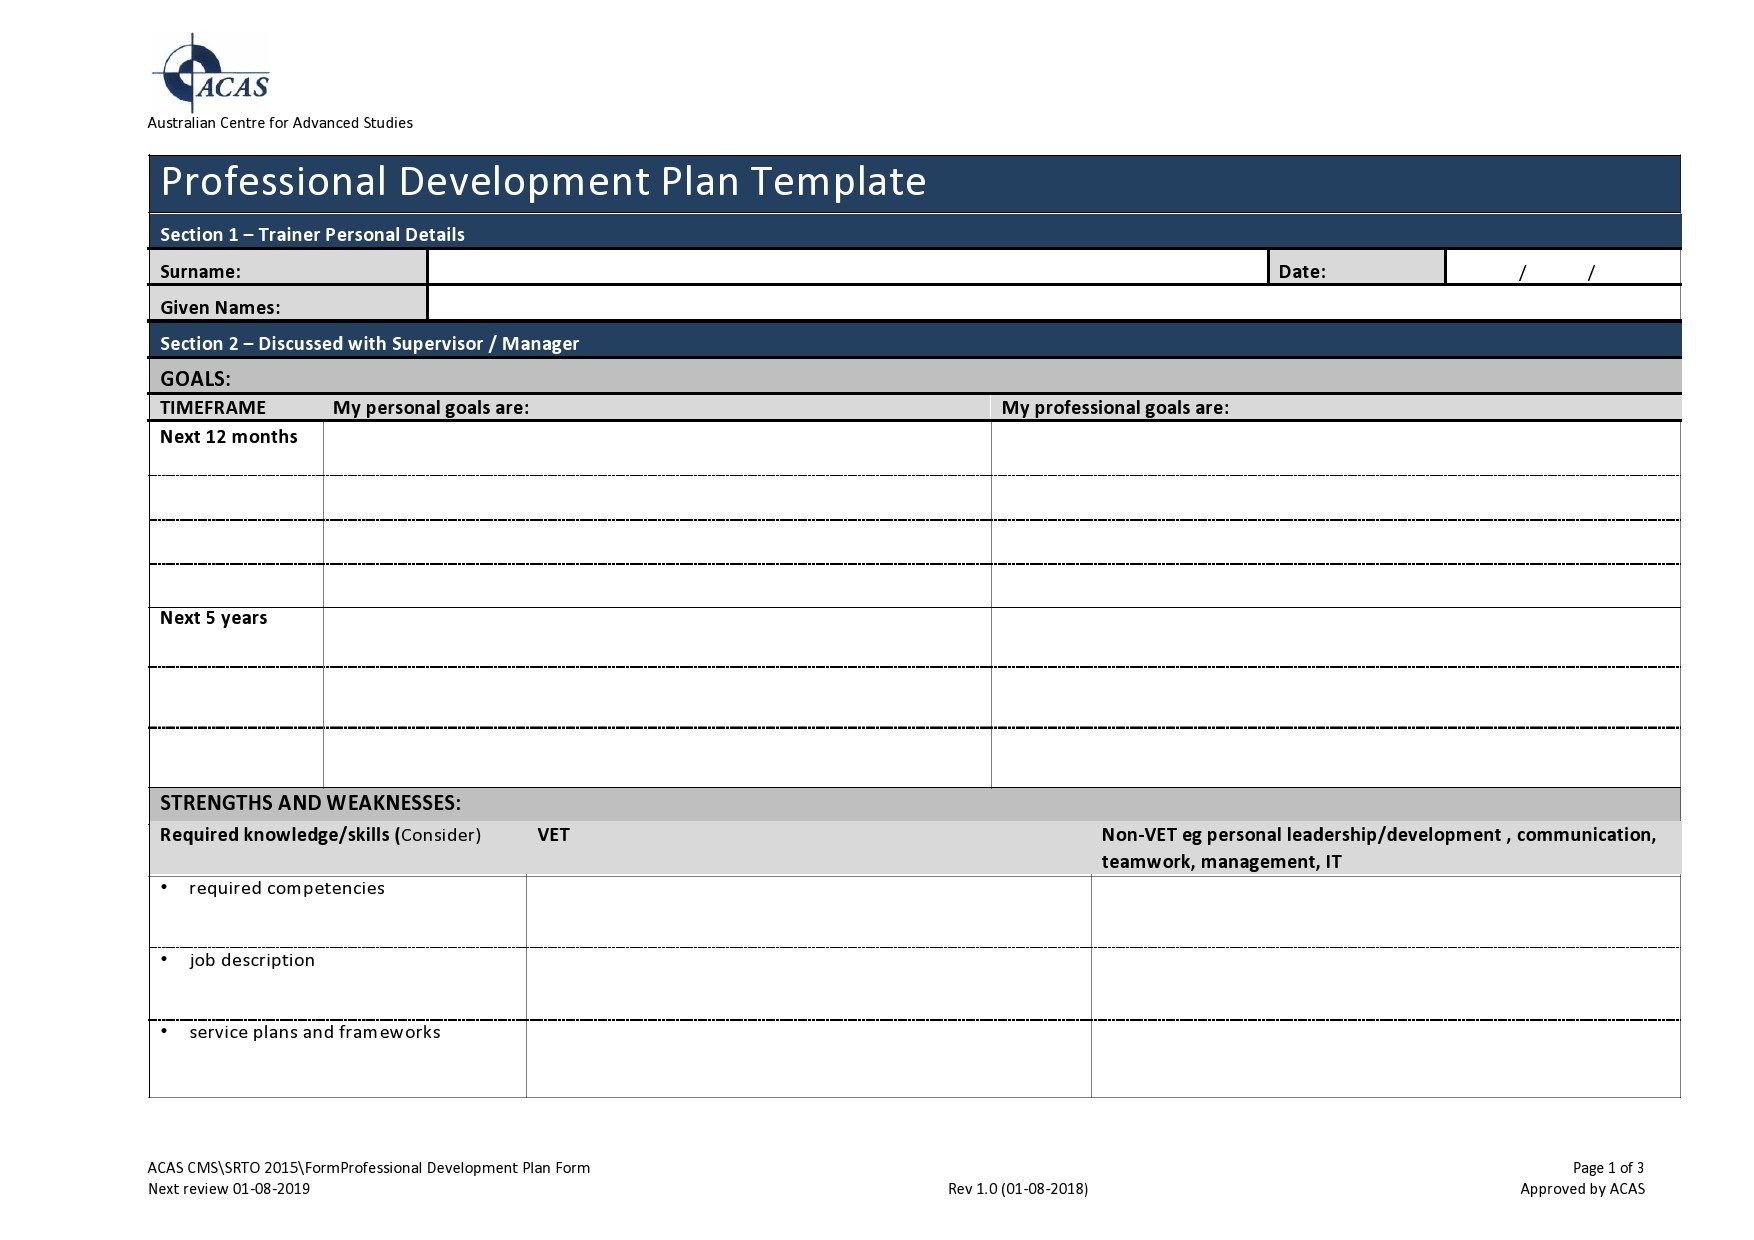 business development plan template free download